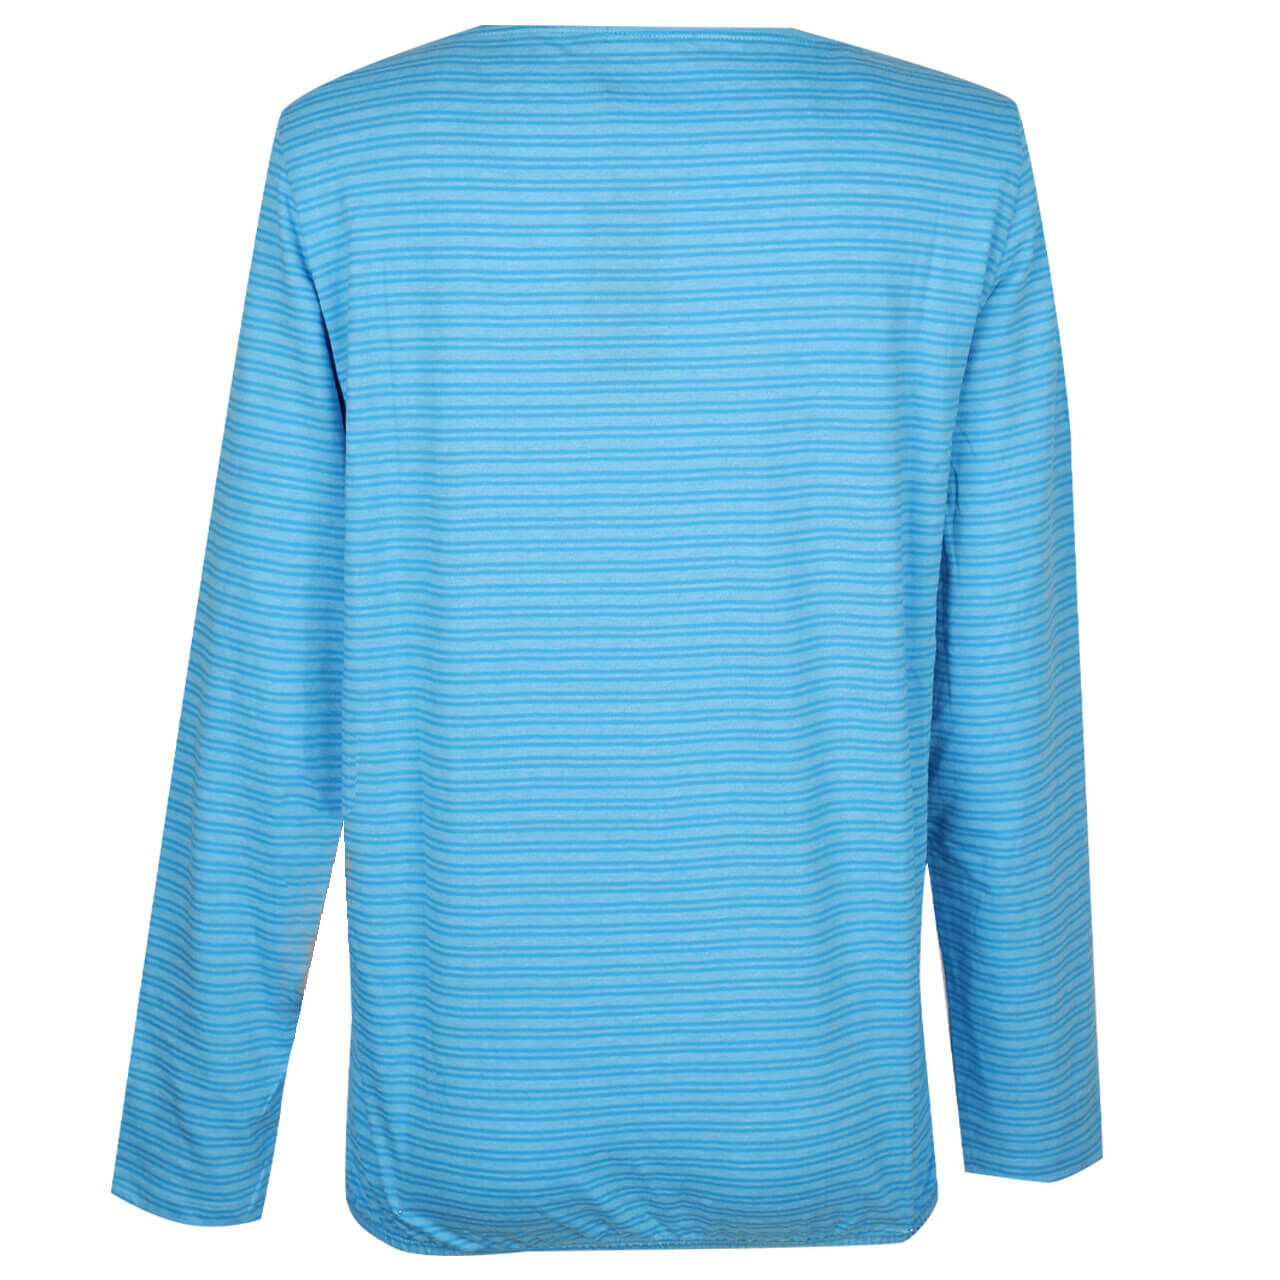 Cecil Overdye Double Stripe Langarm Shirt club blue melange